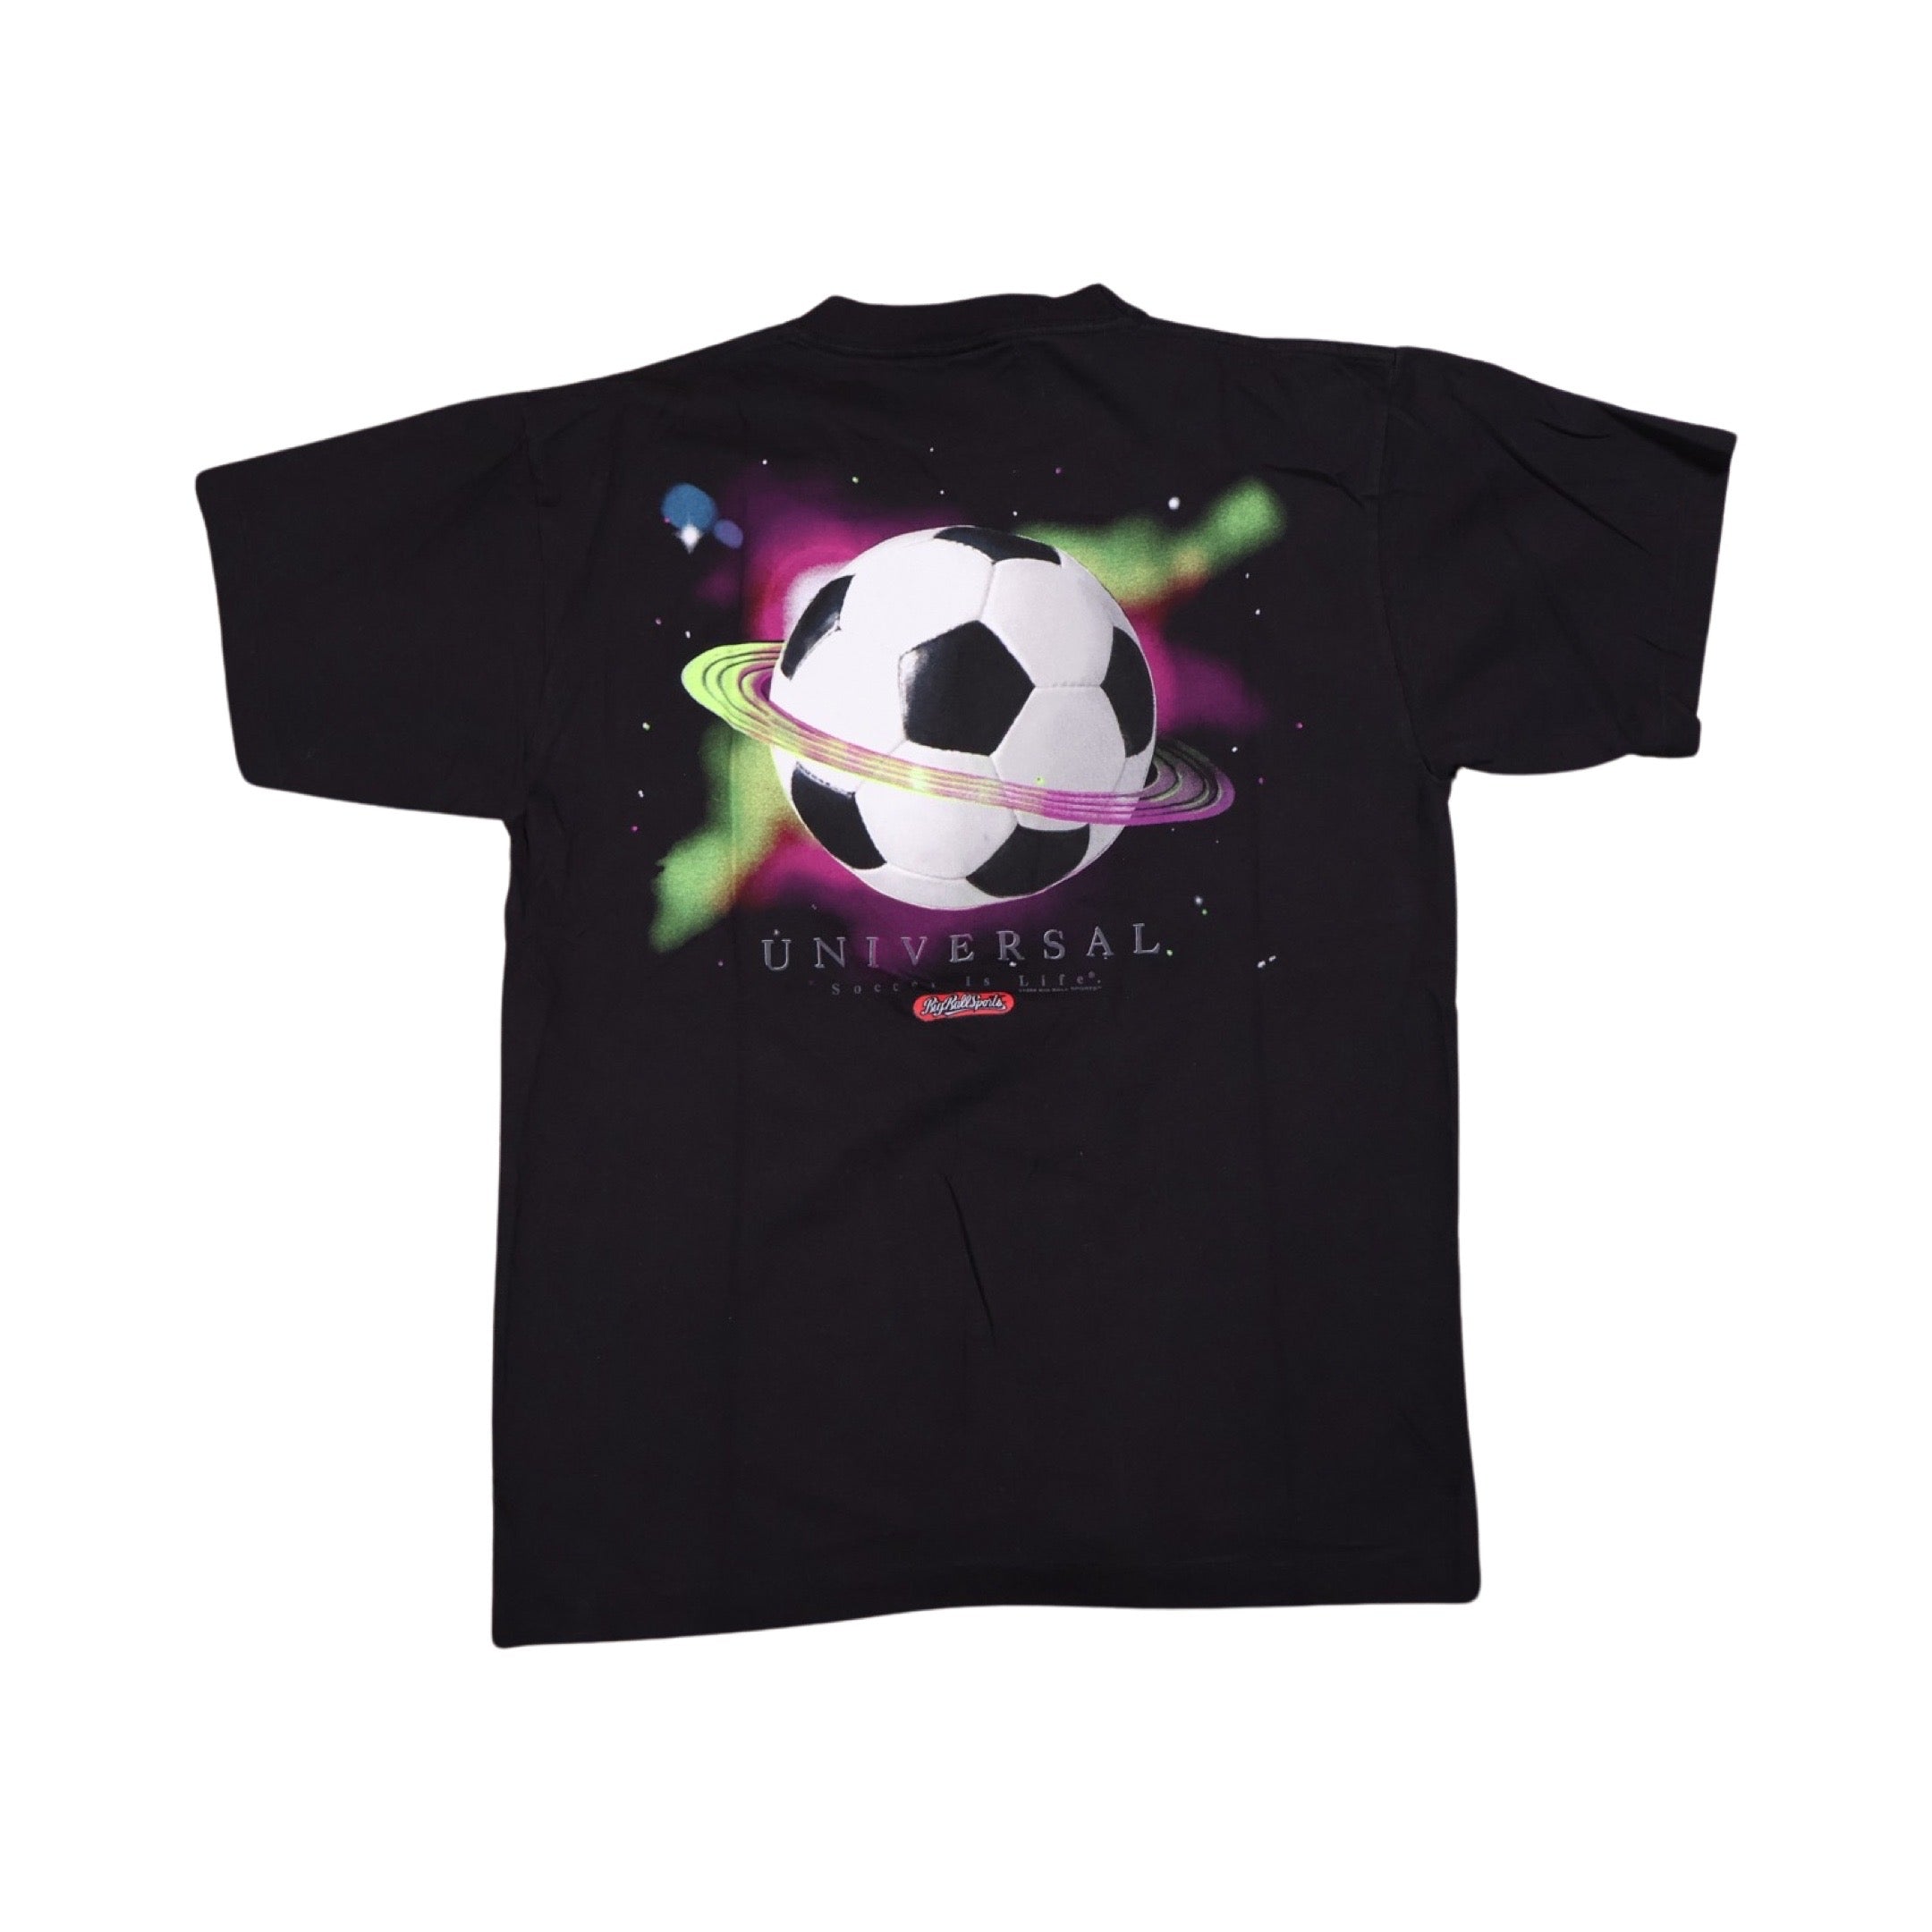 Universal Soccer 1996 T-Shirt (Large)